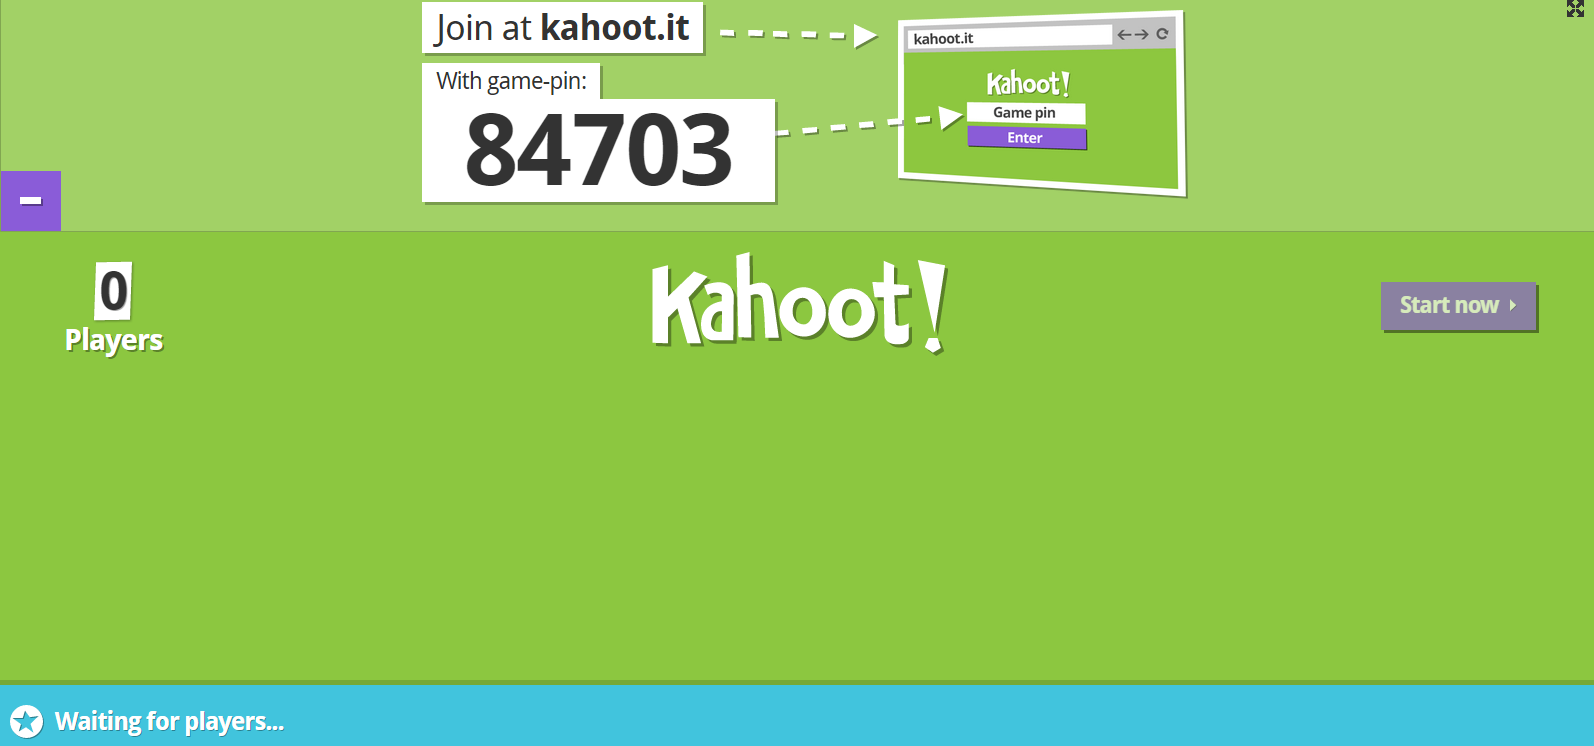 kahoot-login